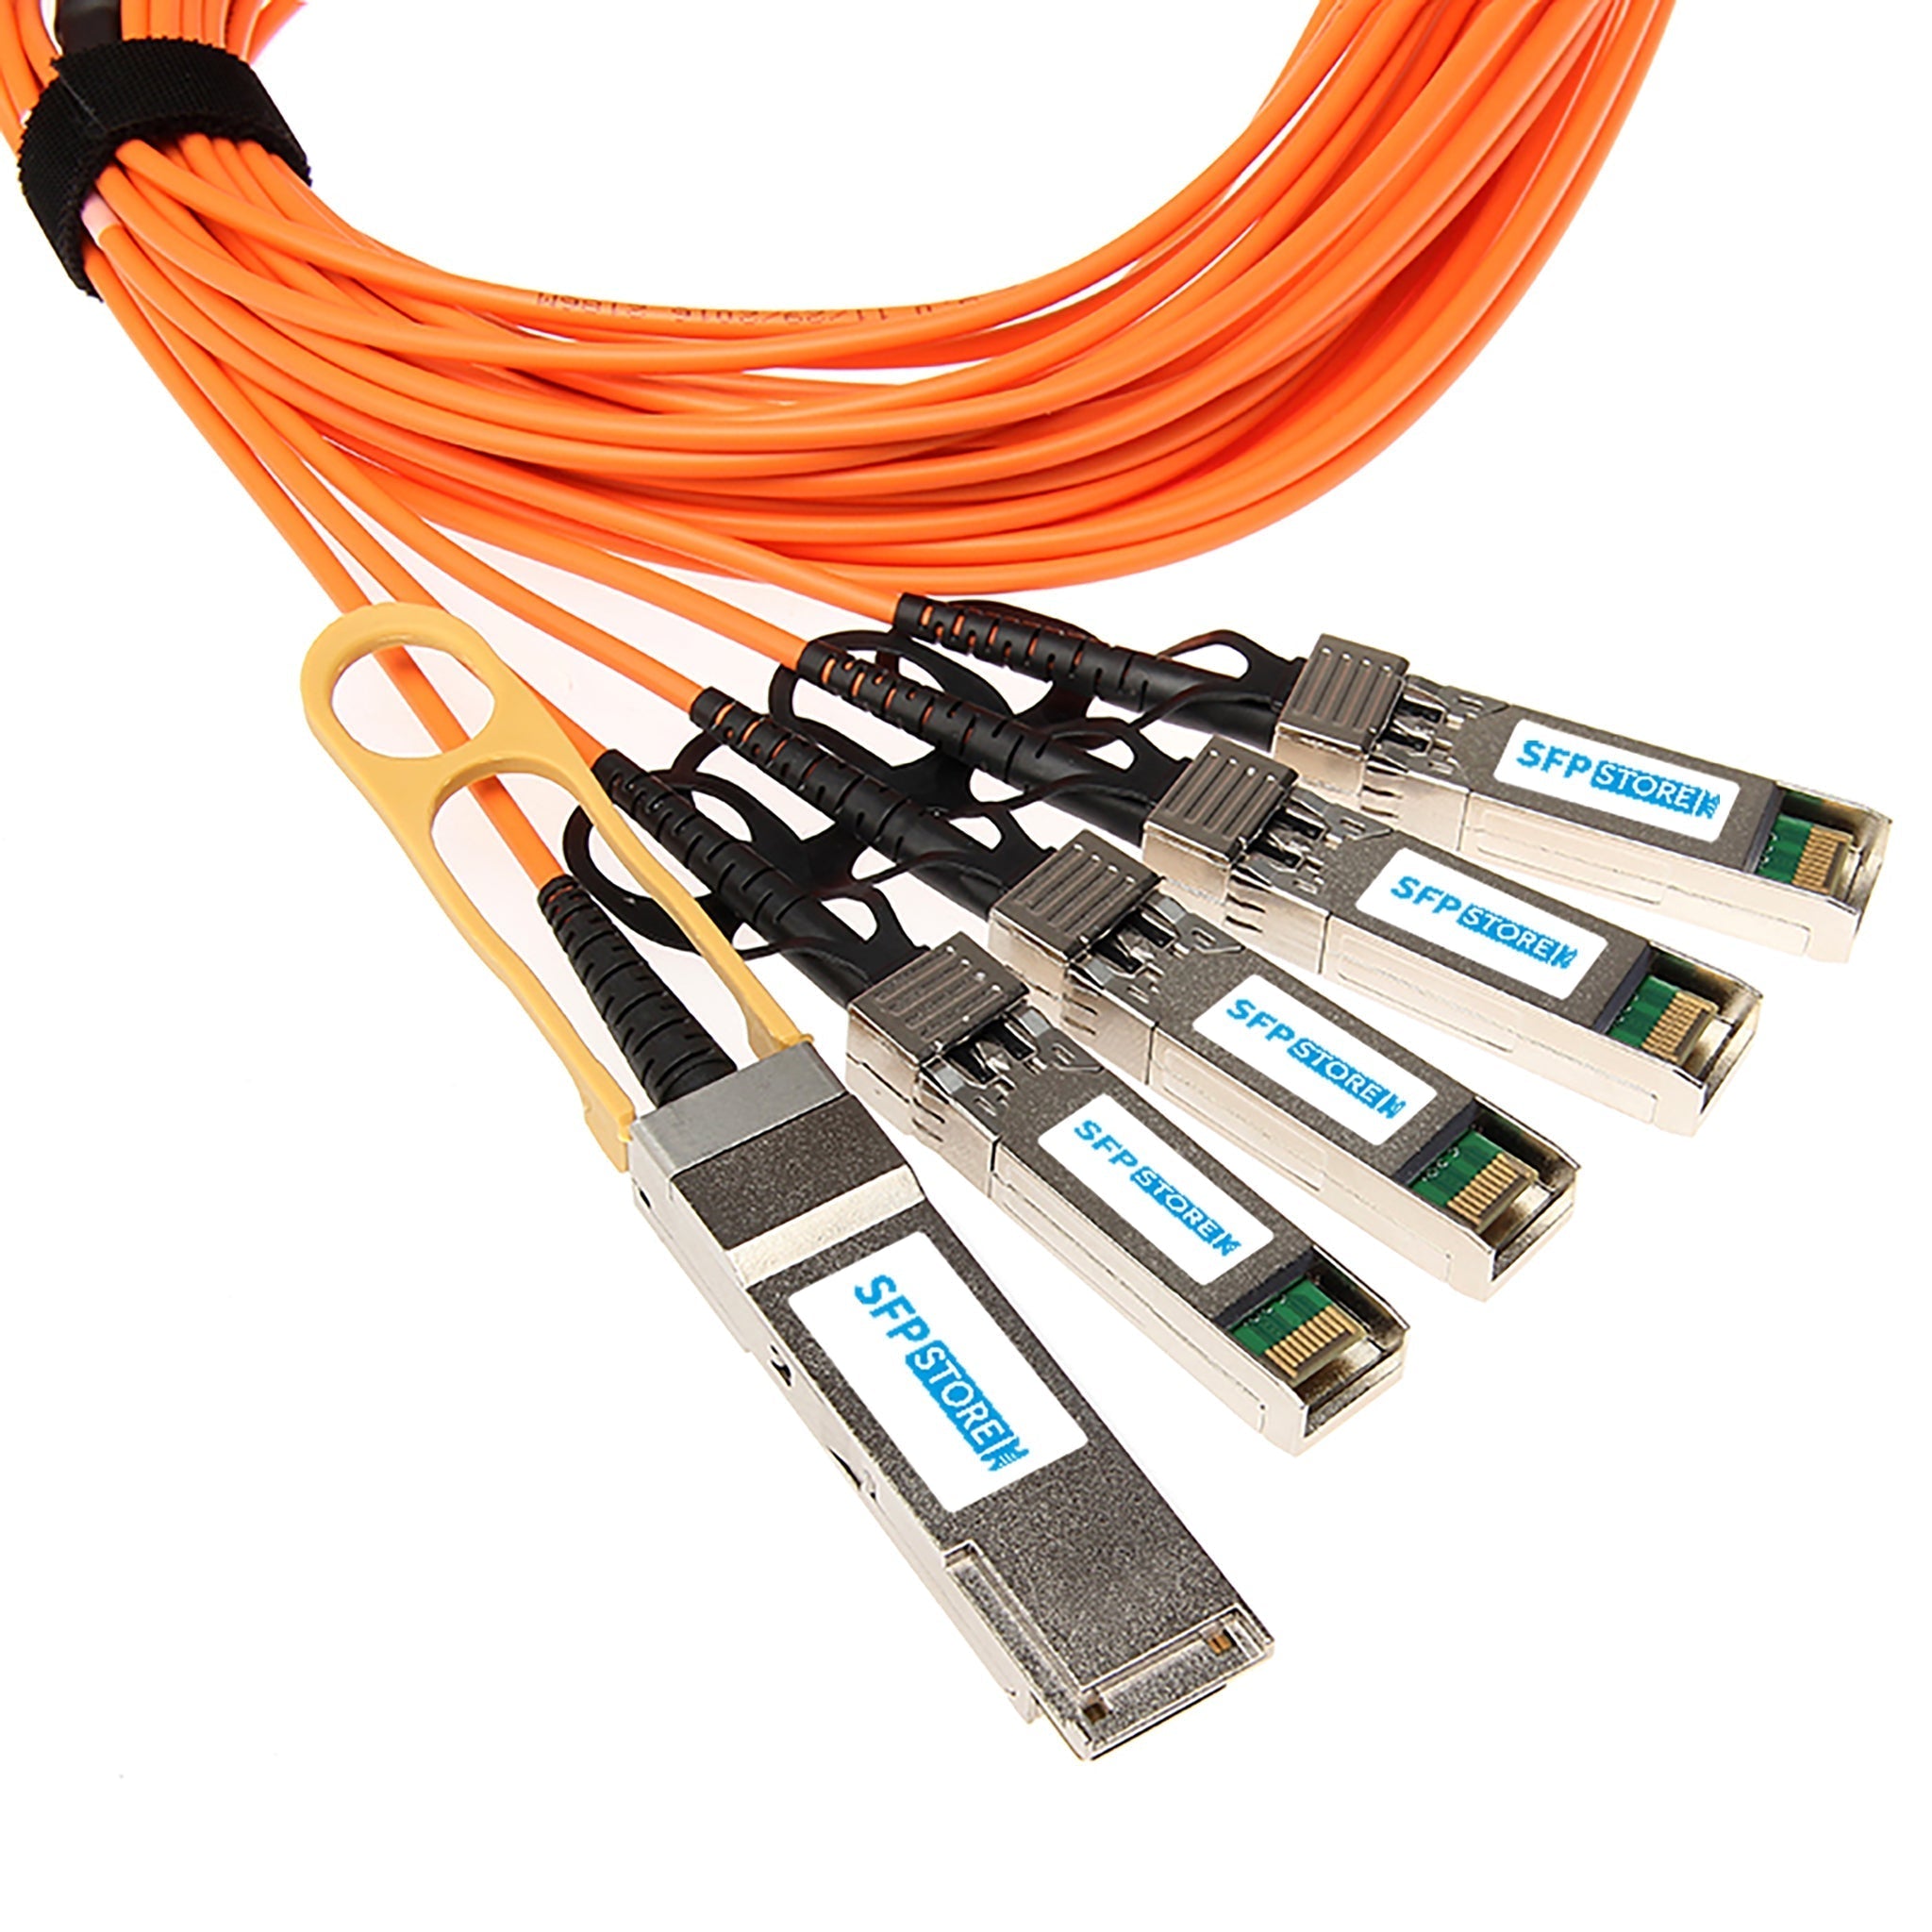 QSFP-4X10G-AOC5M-C - 5m Cisco Compatible 40G QSFP+ to 4 x 10G SFP+ Active Optical Cable